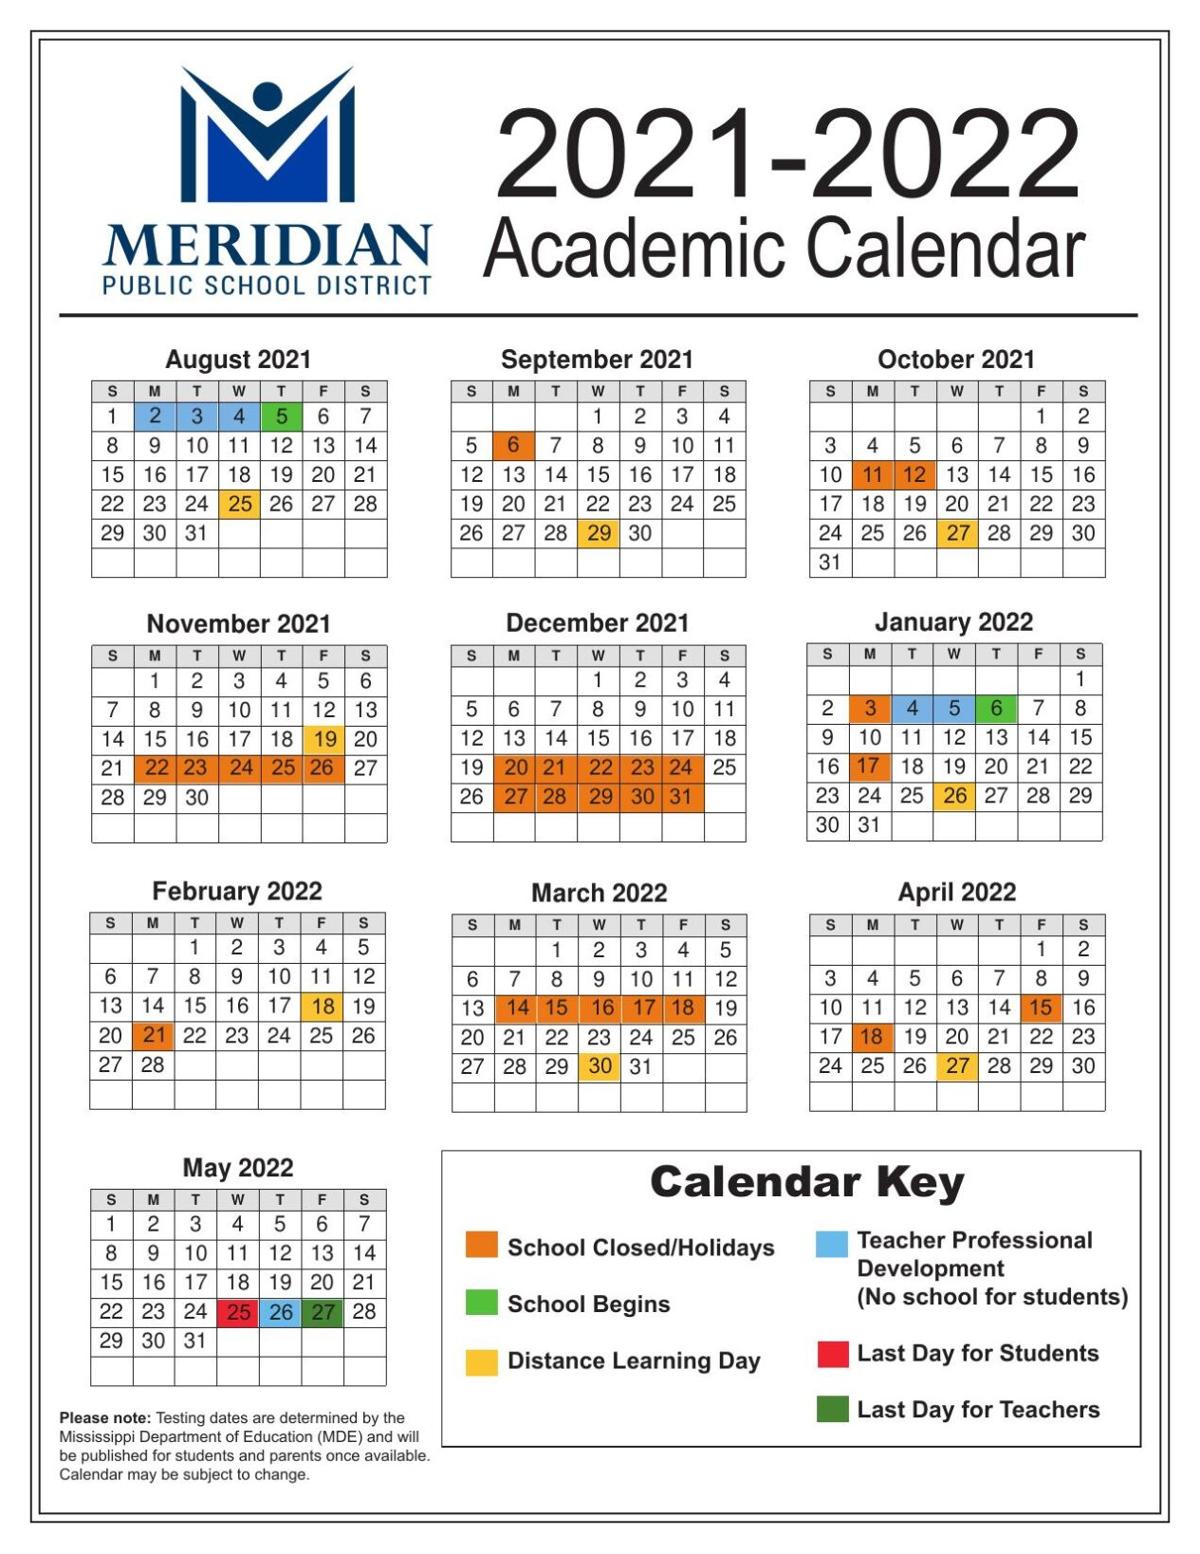 Mississippi State University Academic Calendar 2022 Meridian Schools Approve 2021-2022 Calendar | Local News | Meridianstar.com